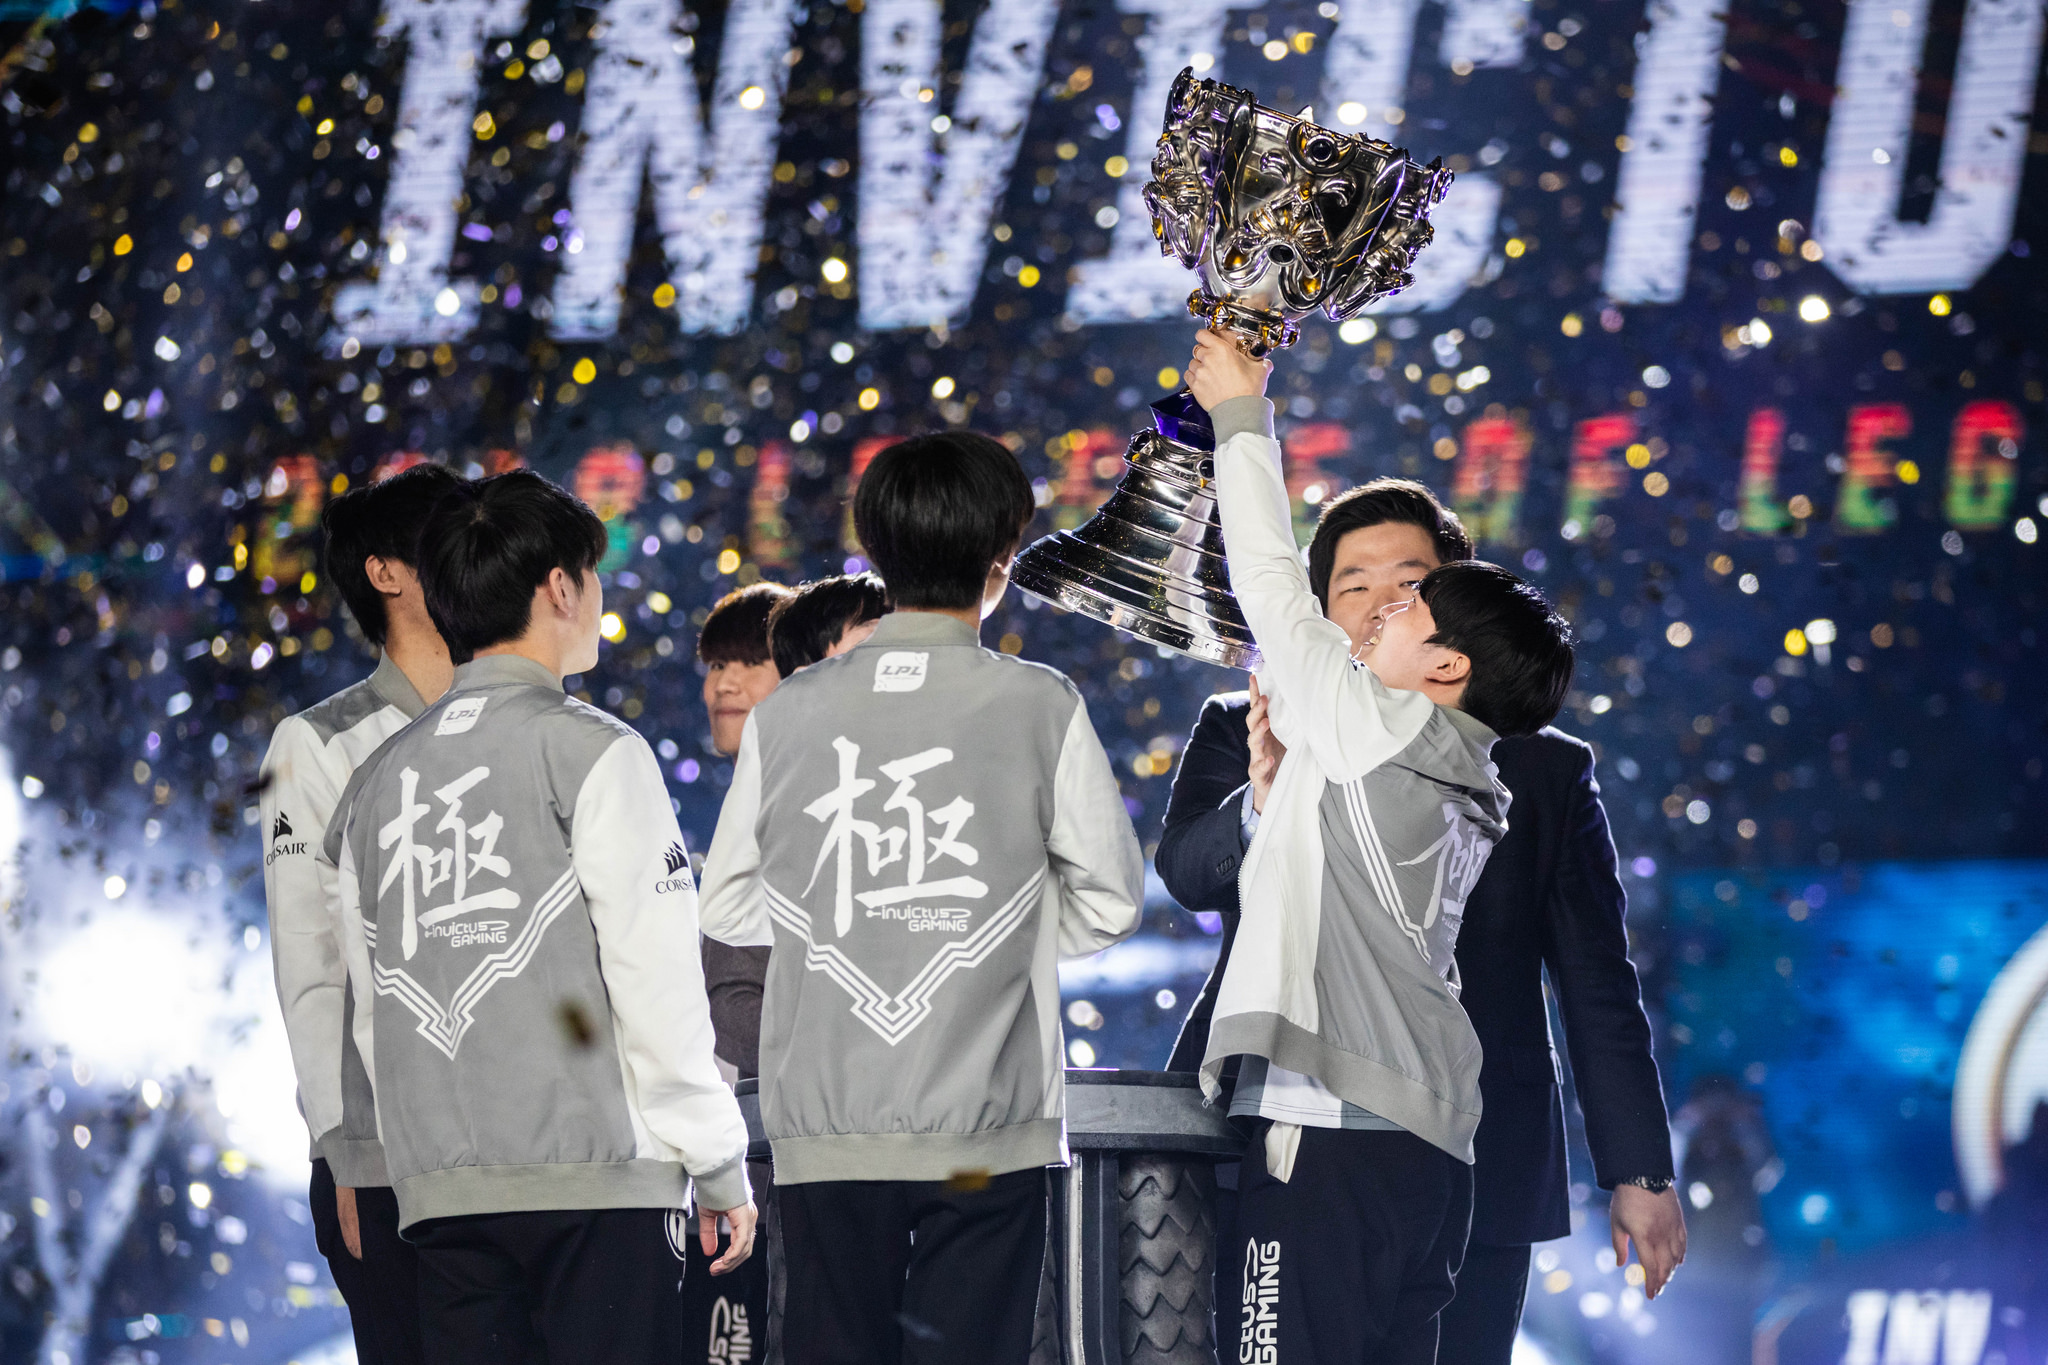 IG 夺冠，是给中国电竞一次最大的正名 - 知乎